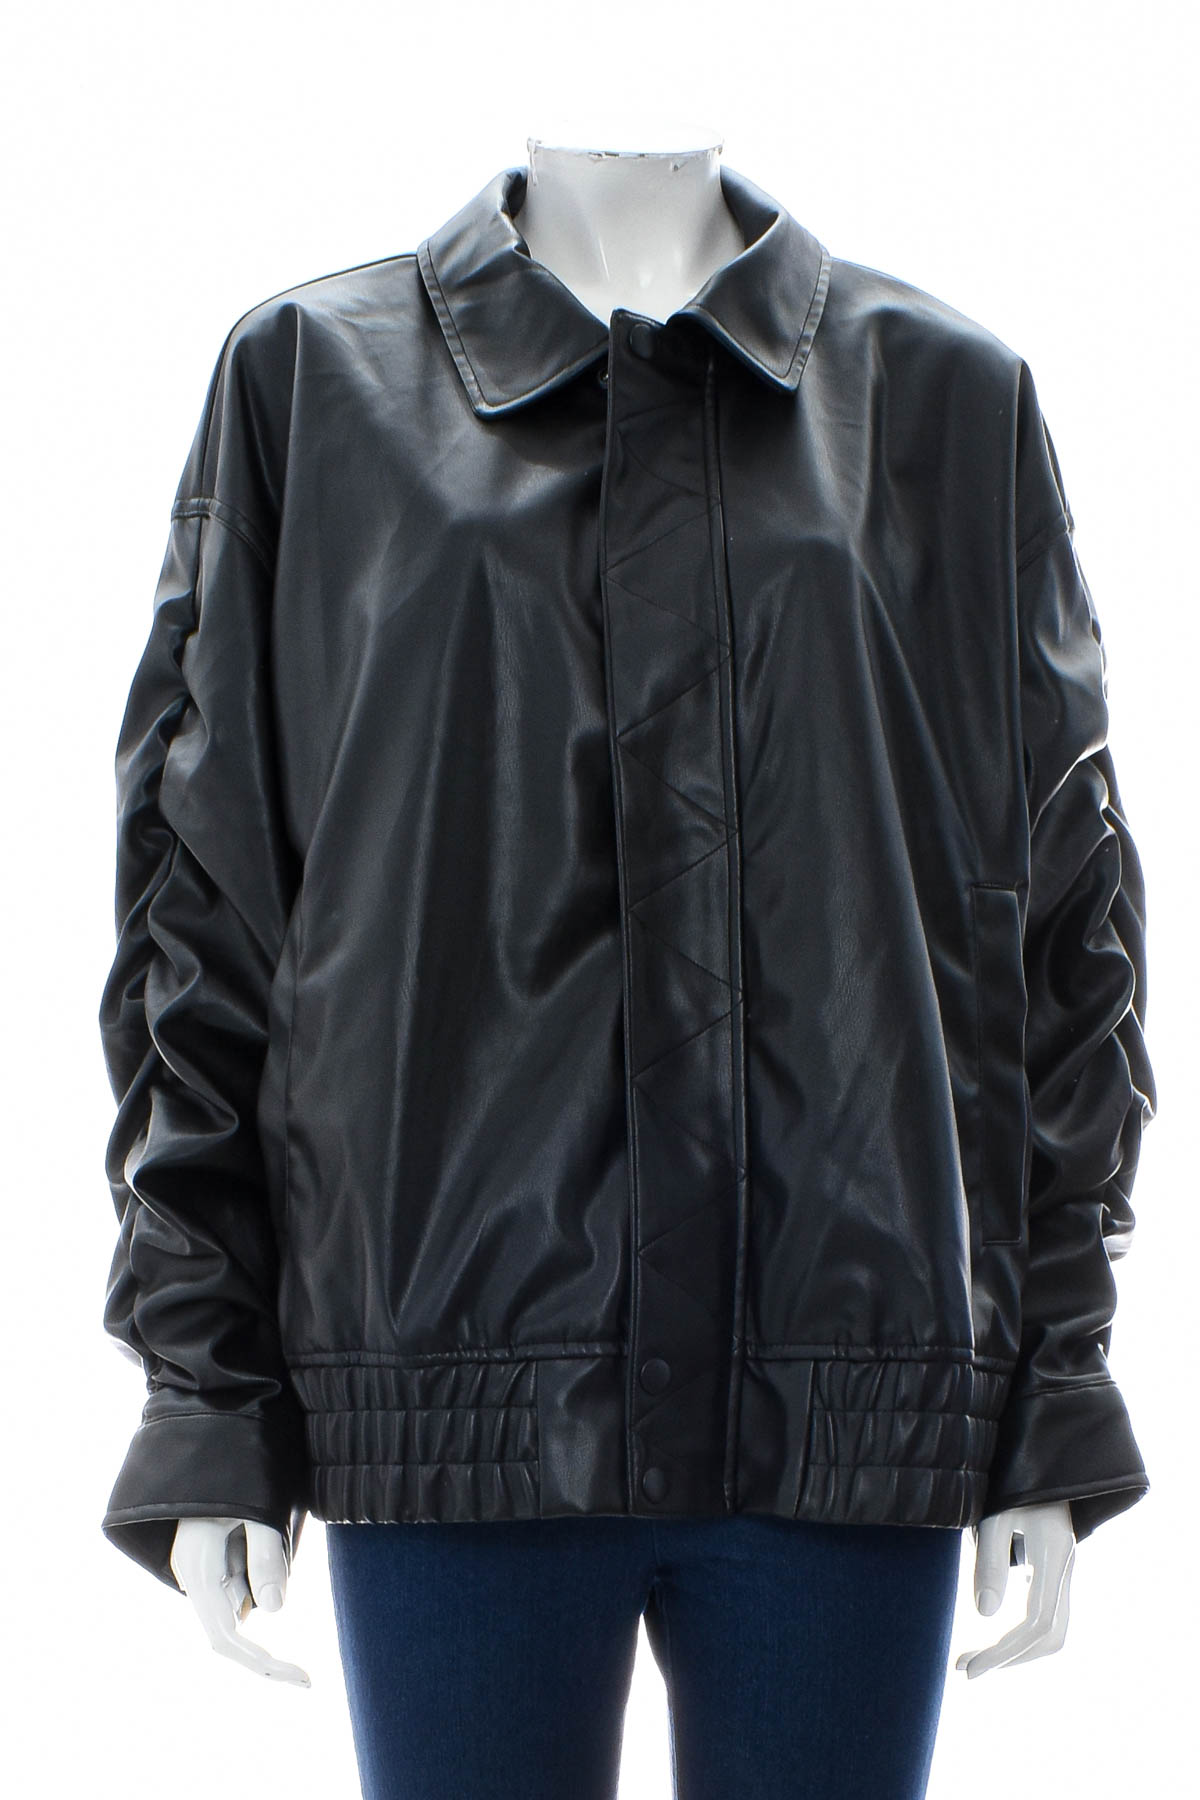 Women's leather jacket - AVA & VIV - 0